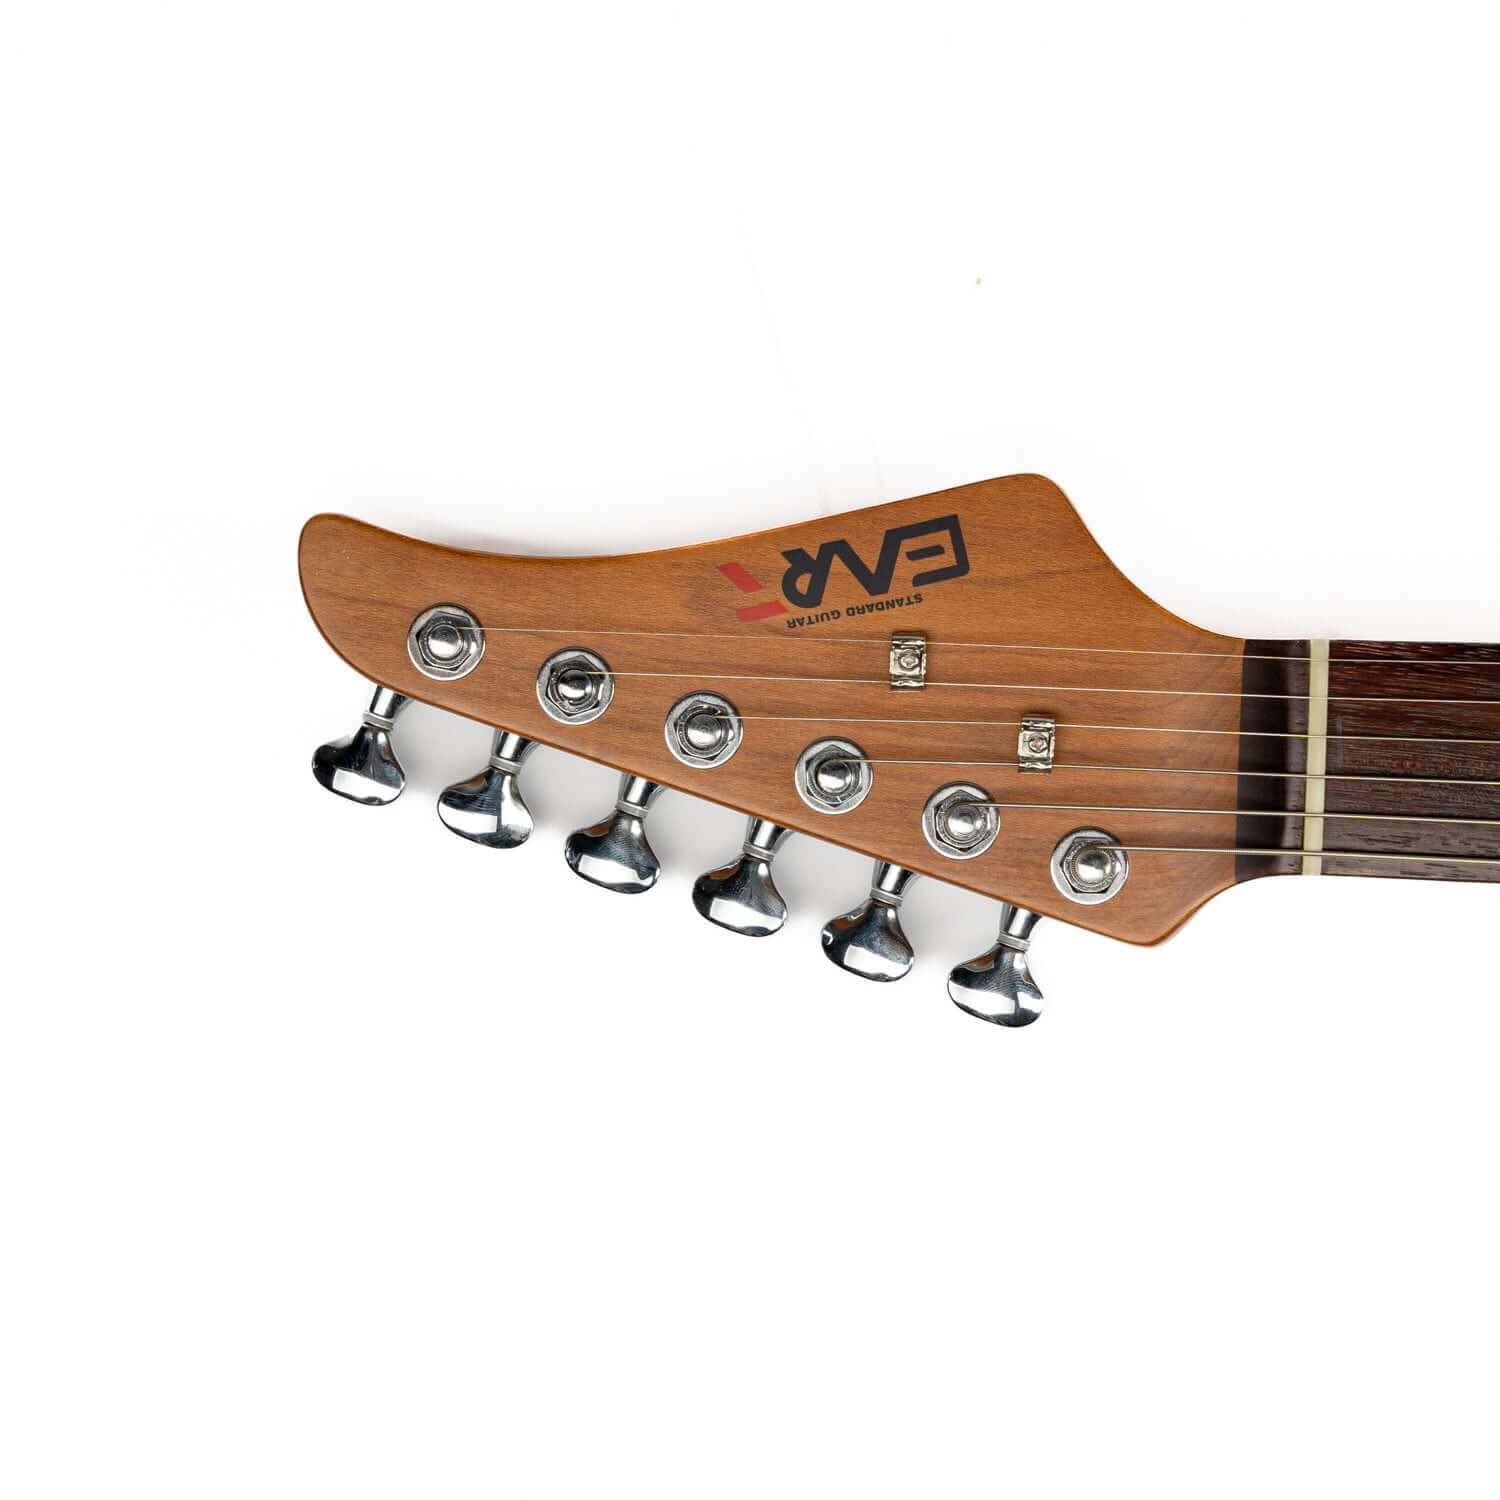 EART electric guitar DMX-9TC headstock